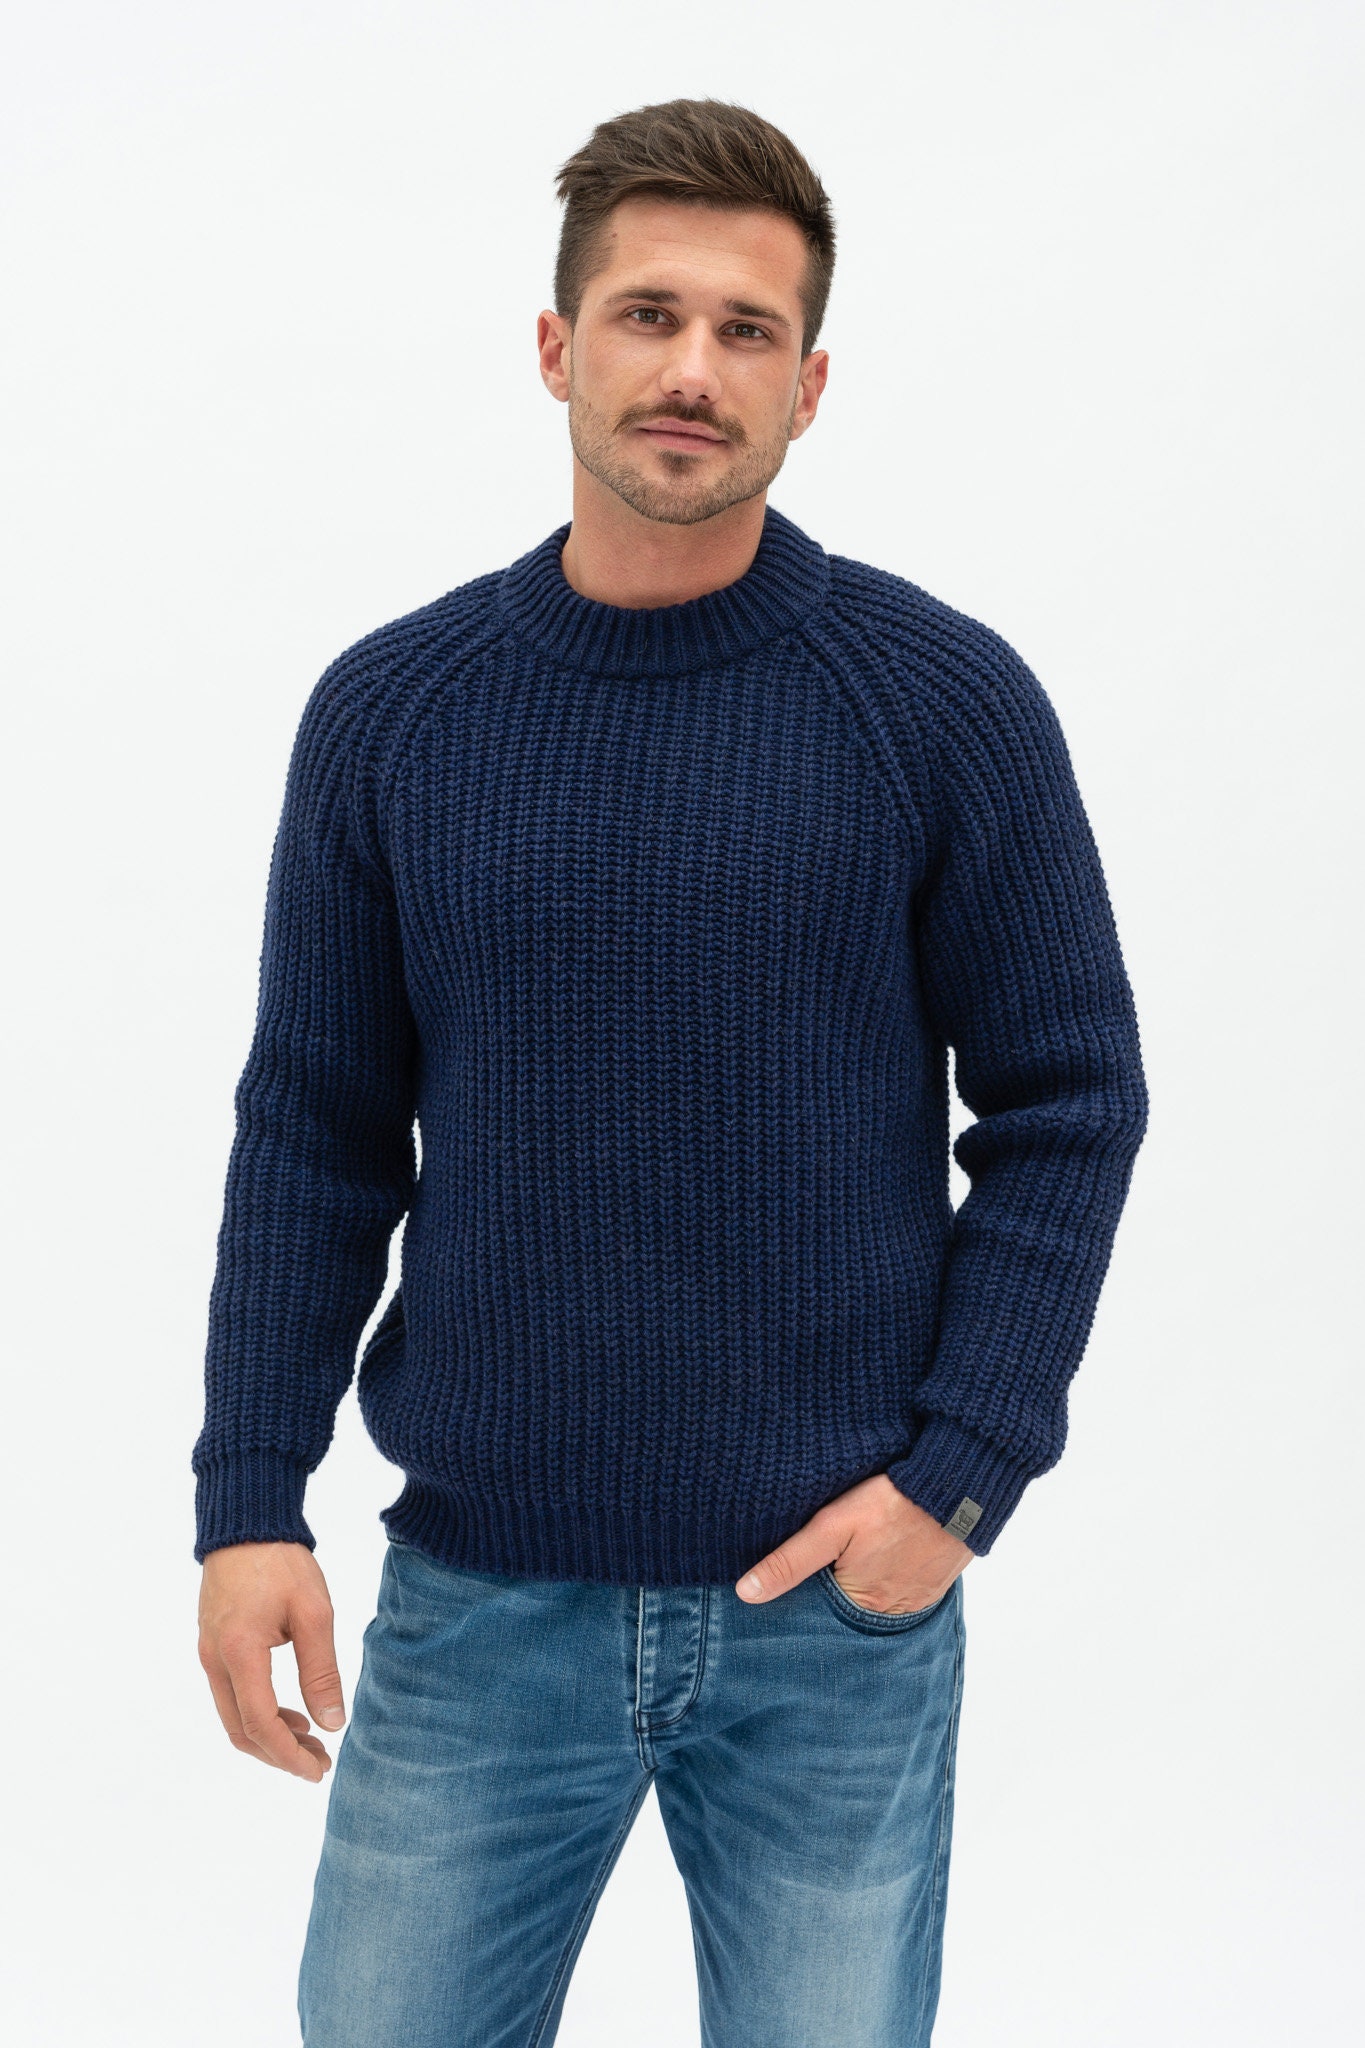 Black Wool Sweater Crew Neck for Men Scandinavian Style - Etsy UK